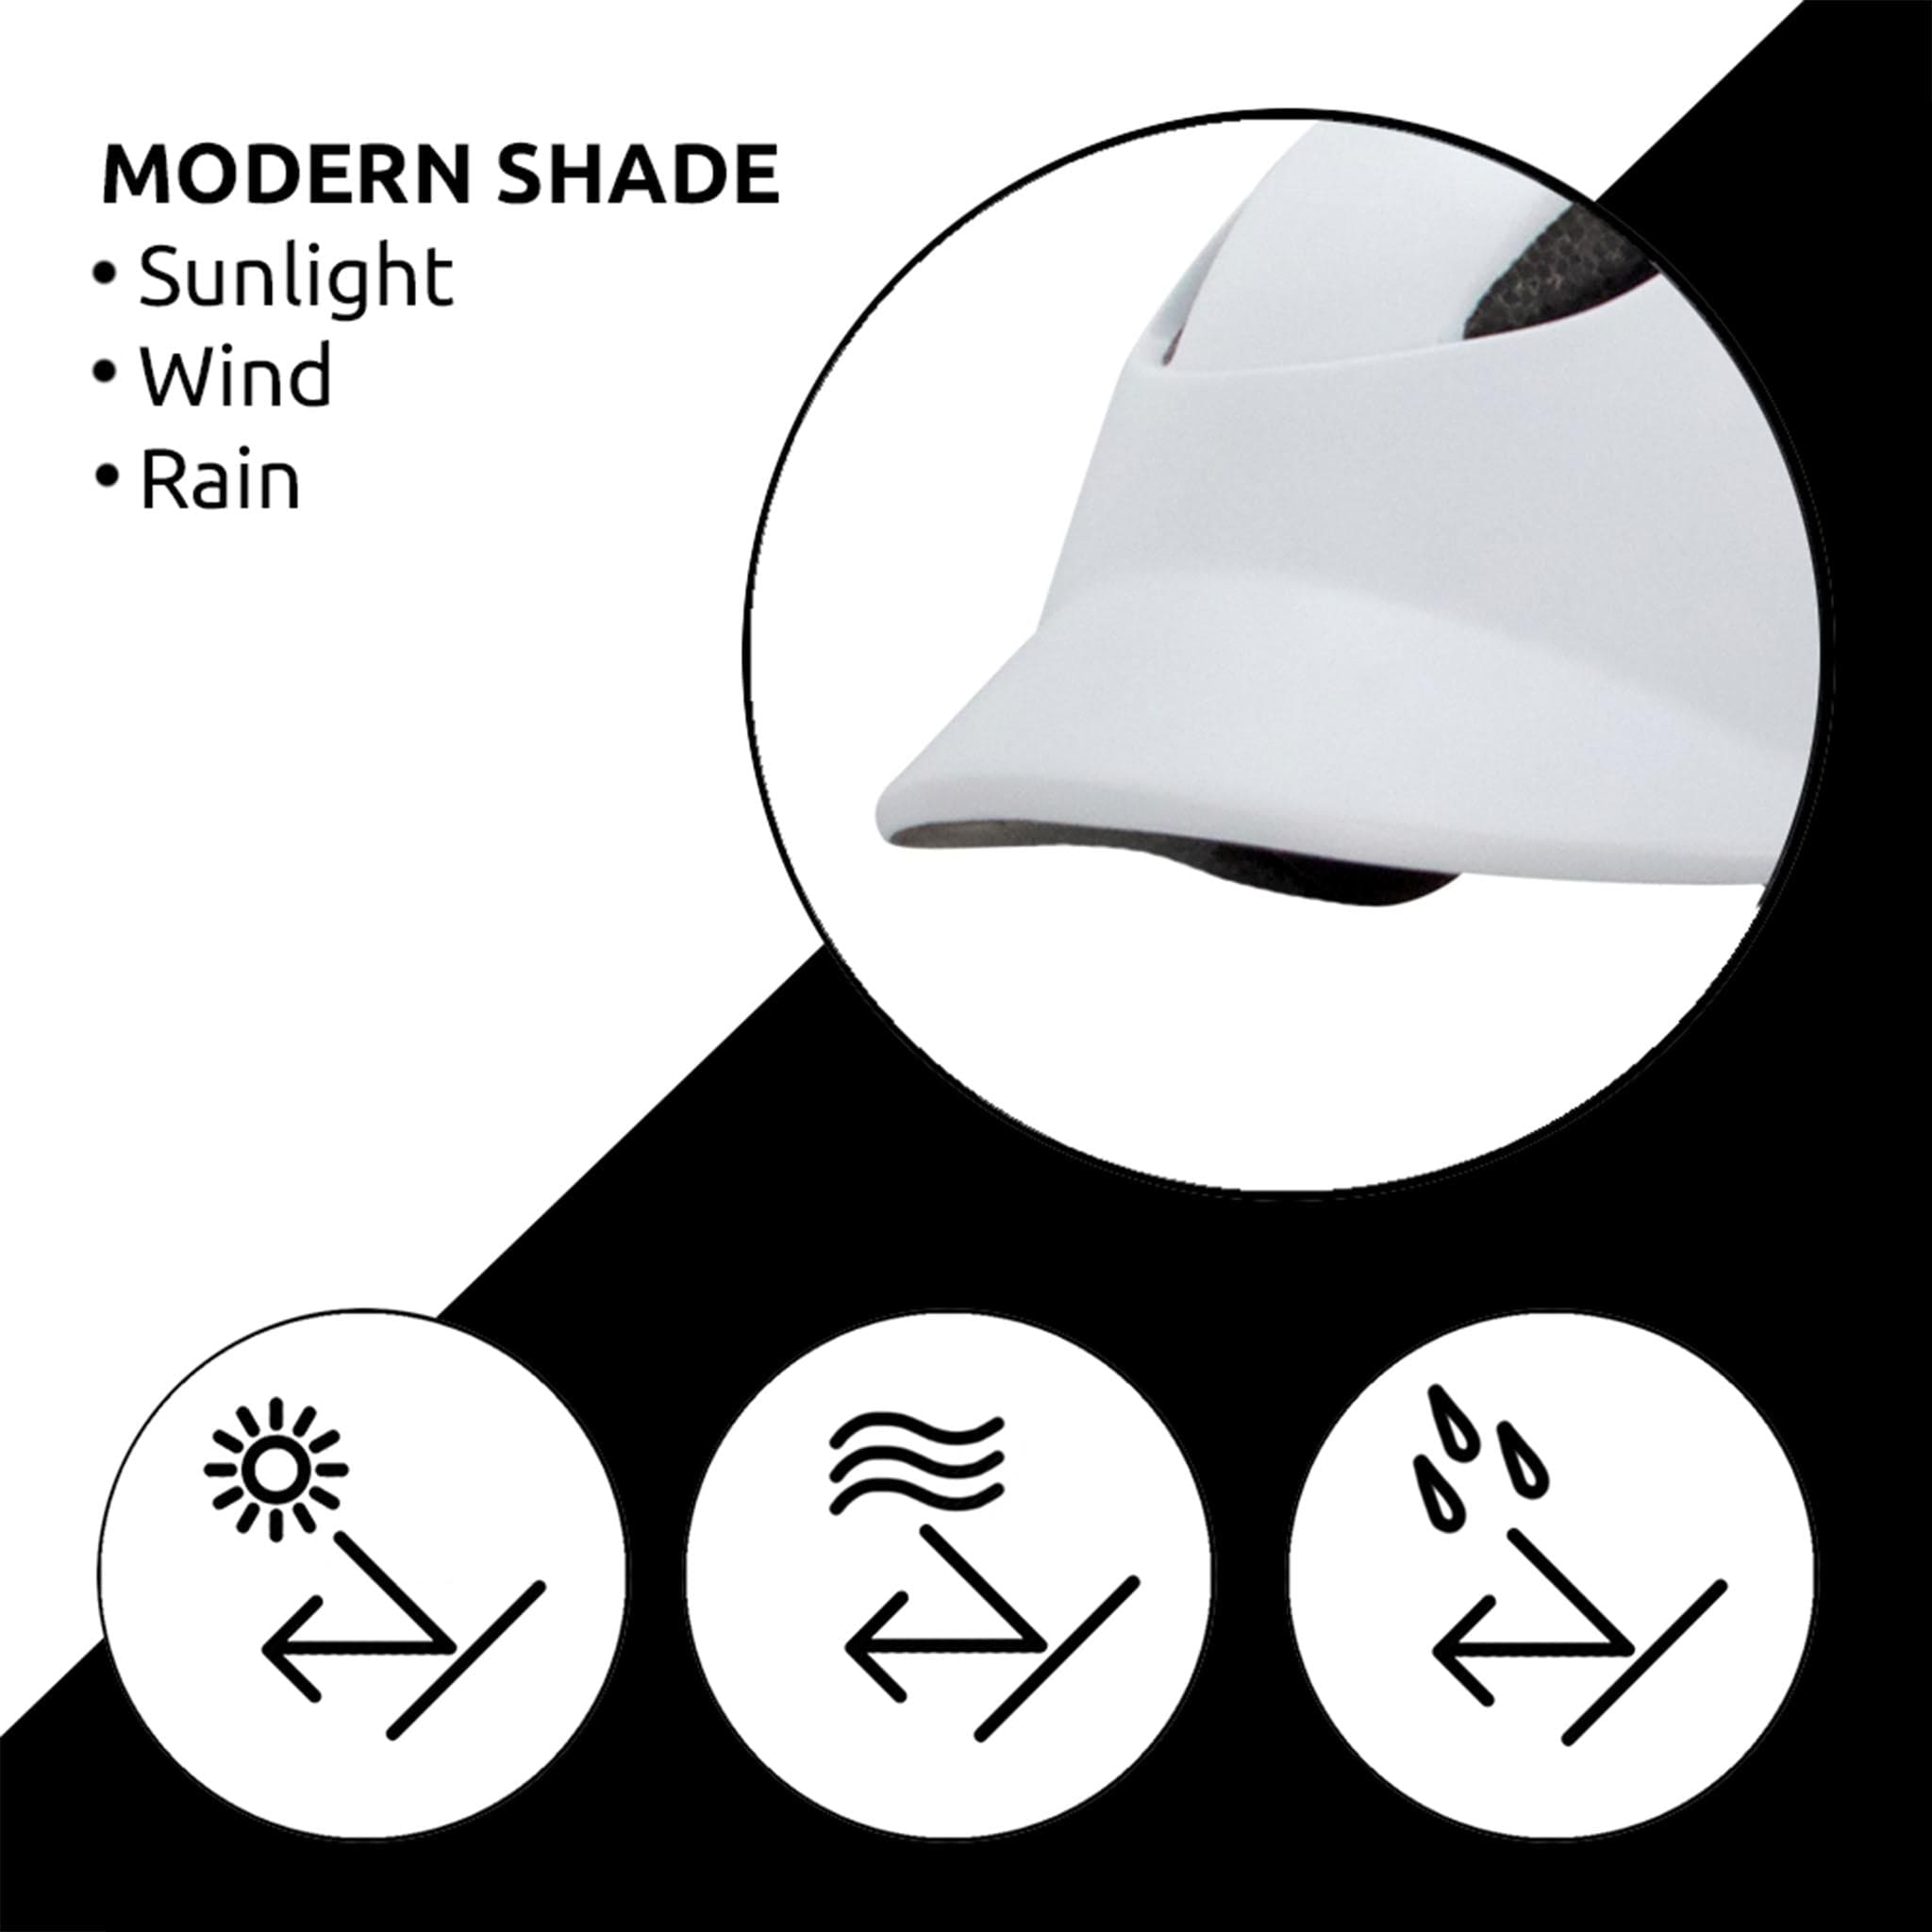 Aero cycle helmets - modern shade